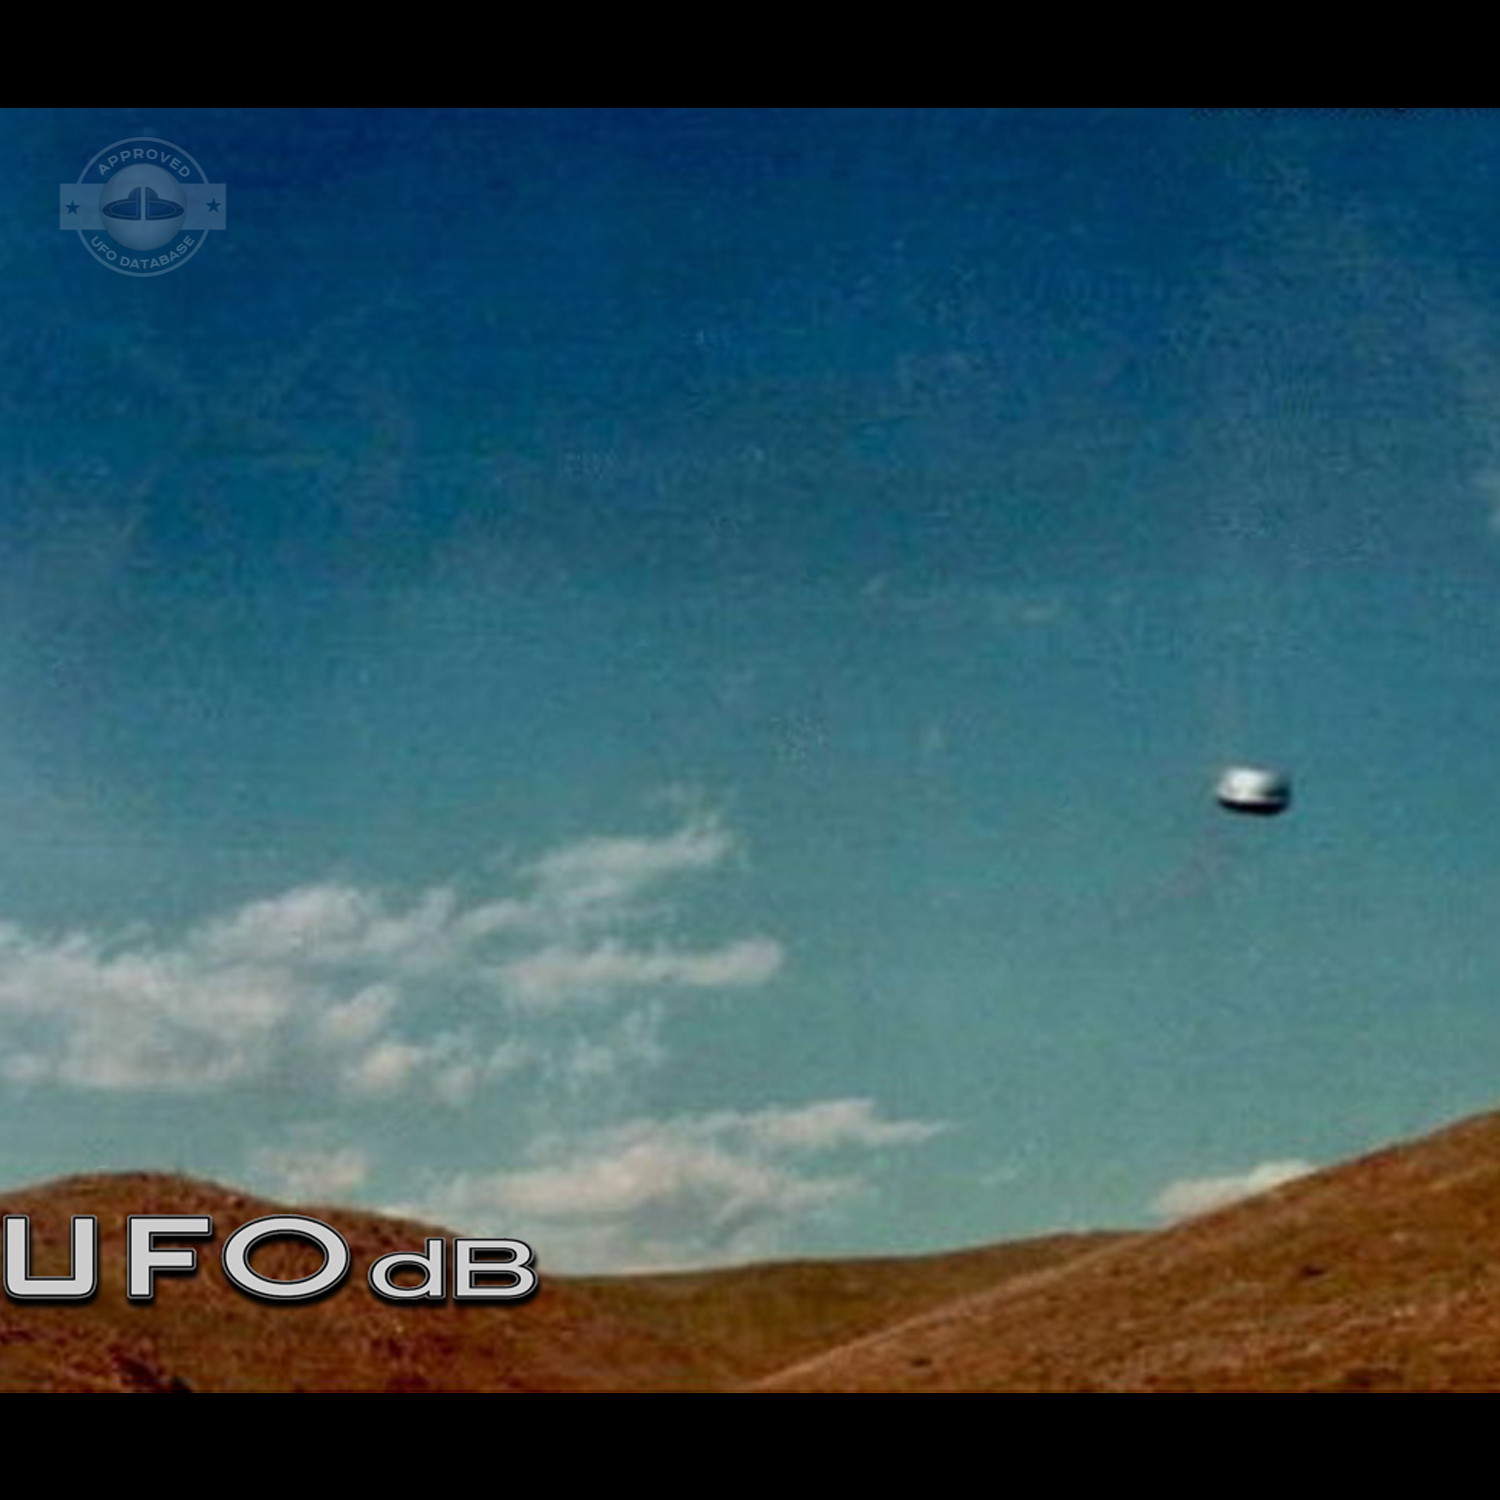 Yamanlar Mountain Peak Hitchhikers UFO Picture | Izmir, Turkey 1996 UFO Picture #182-2